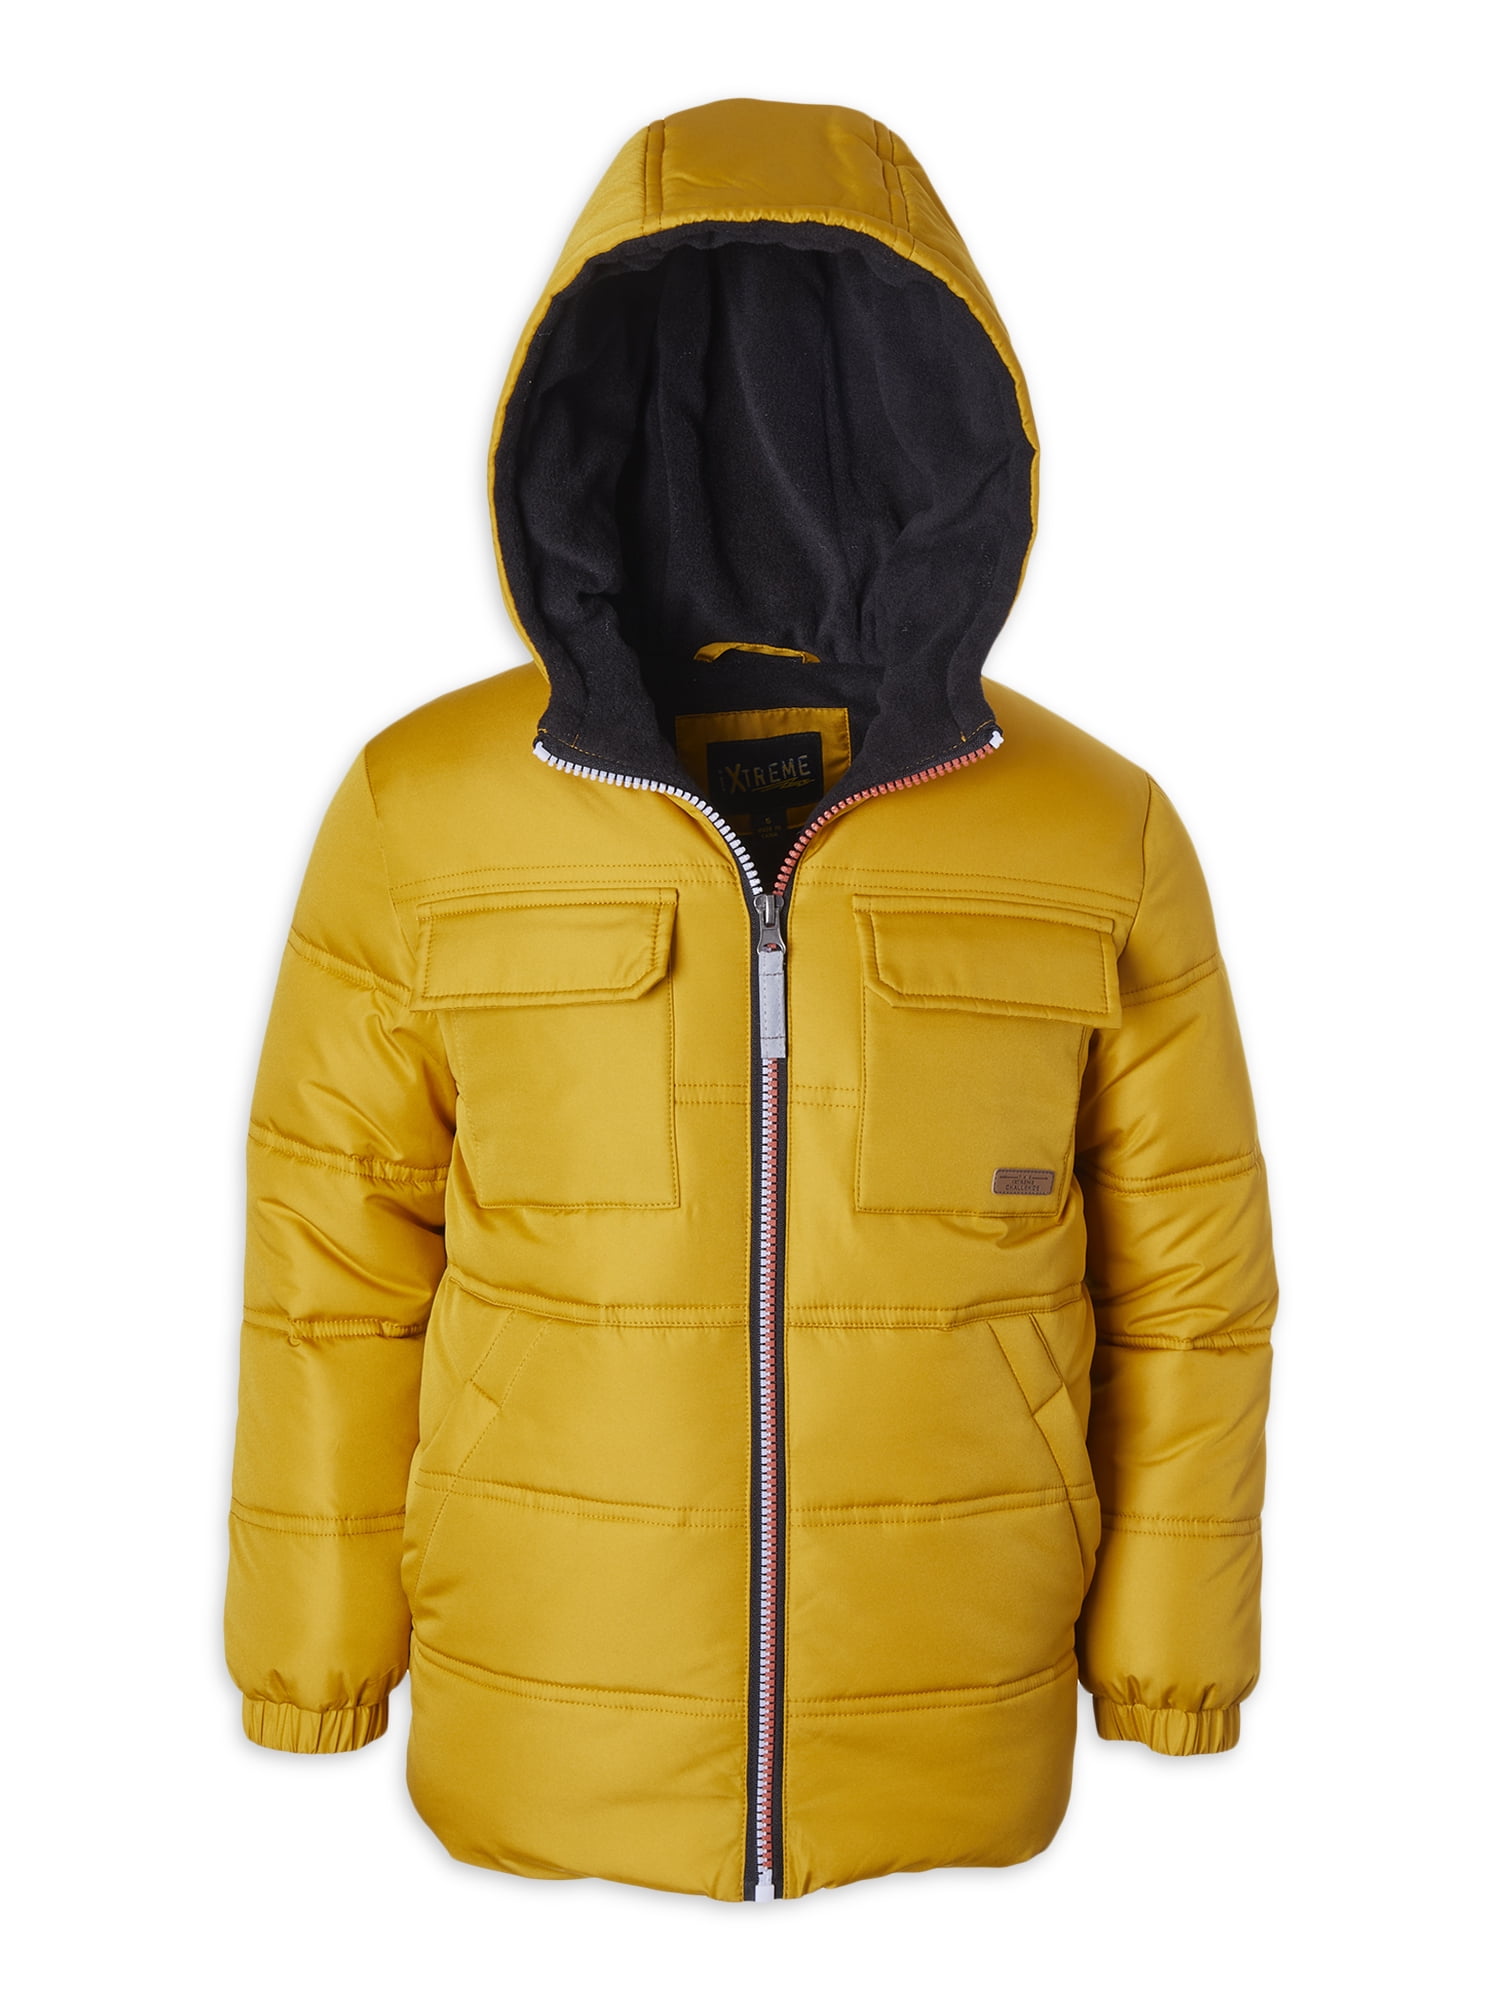 DKNY Boys Heavyweight Ski Parka Polar Fleece Lined Jacket with Sherpa Lined Hood